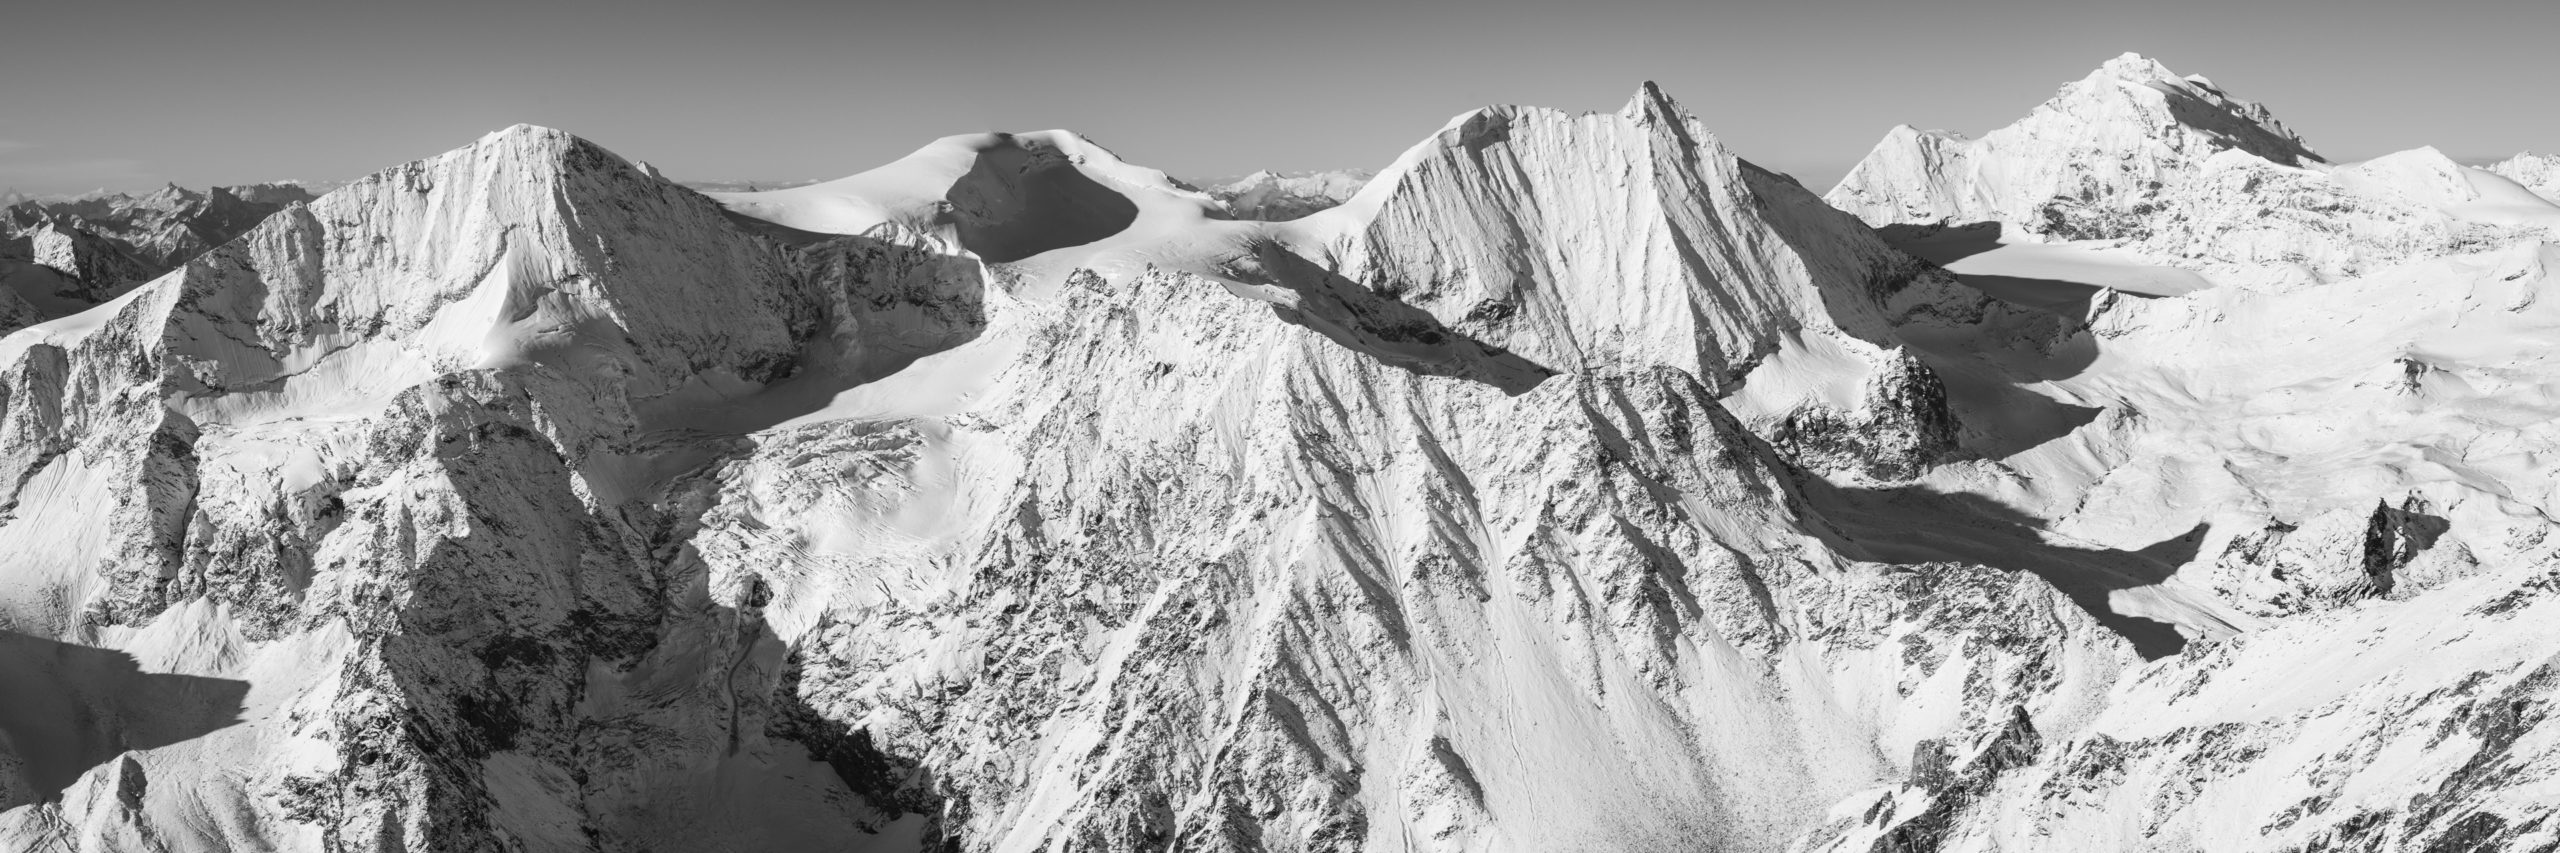 Arolla - Swiss mountain panorama in black and white photo frame